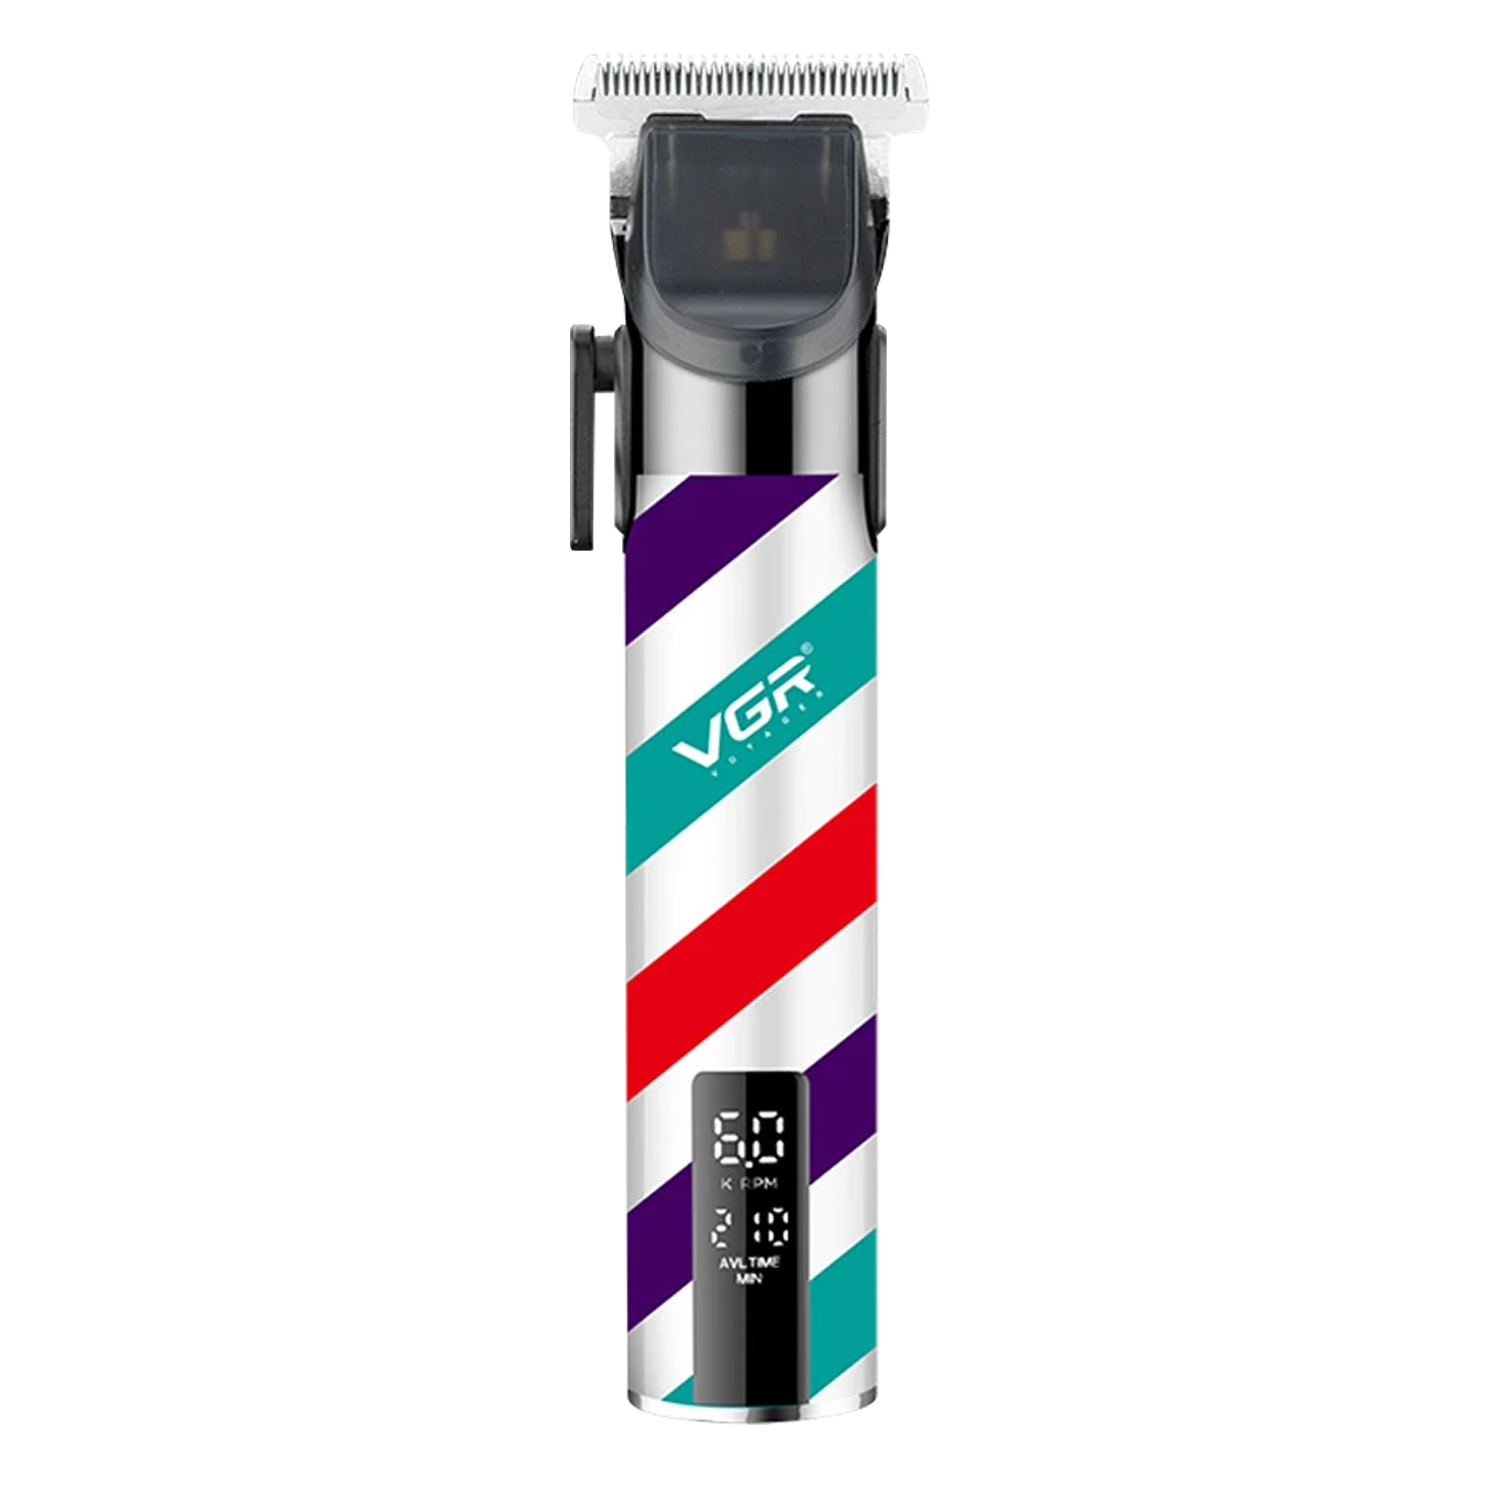 VGR V-692 Hair Clipper For Men, Multi Color